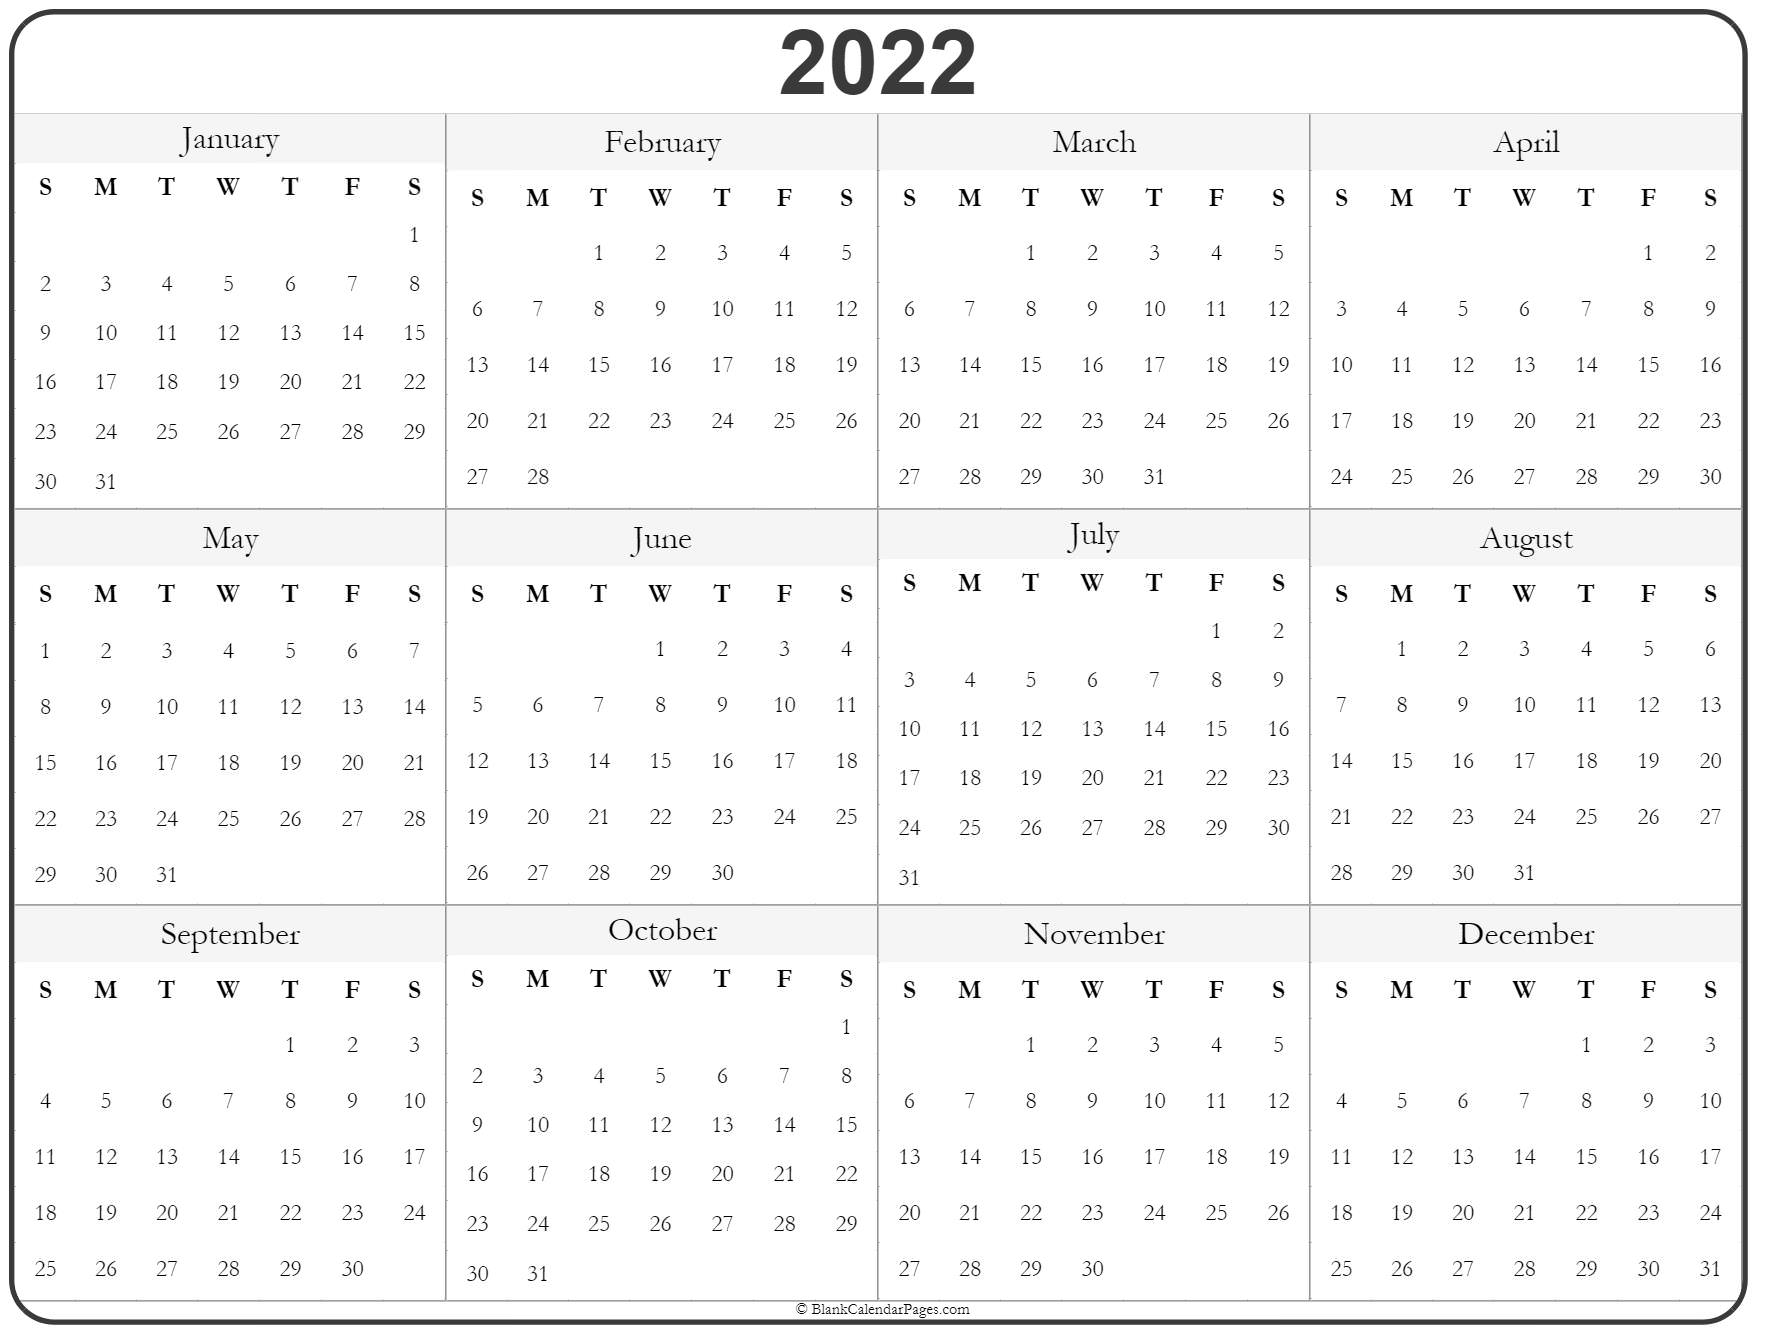 2022 Yearly Calendar 2022 Year Calendar Yearly Printable Chris Duran